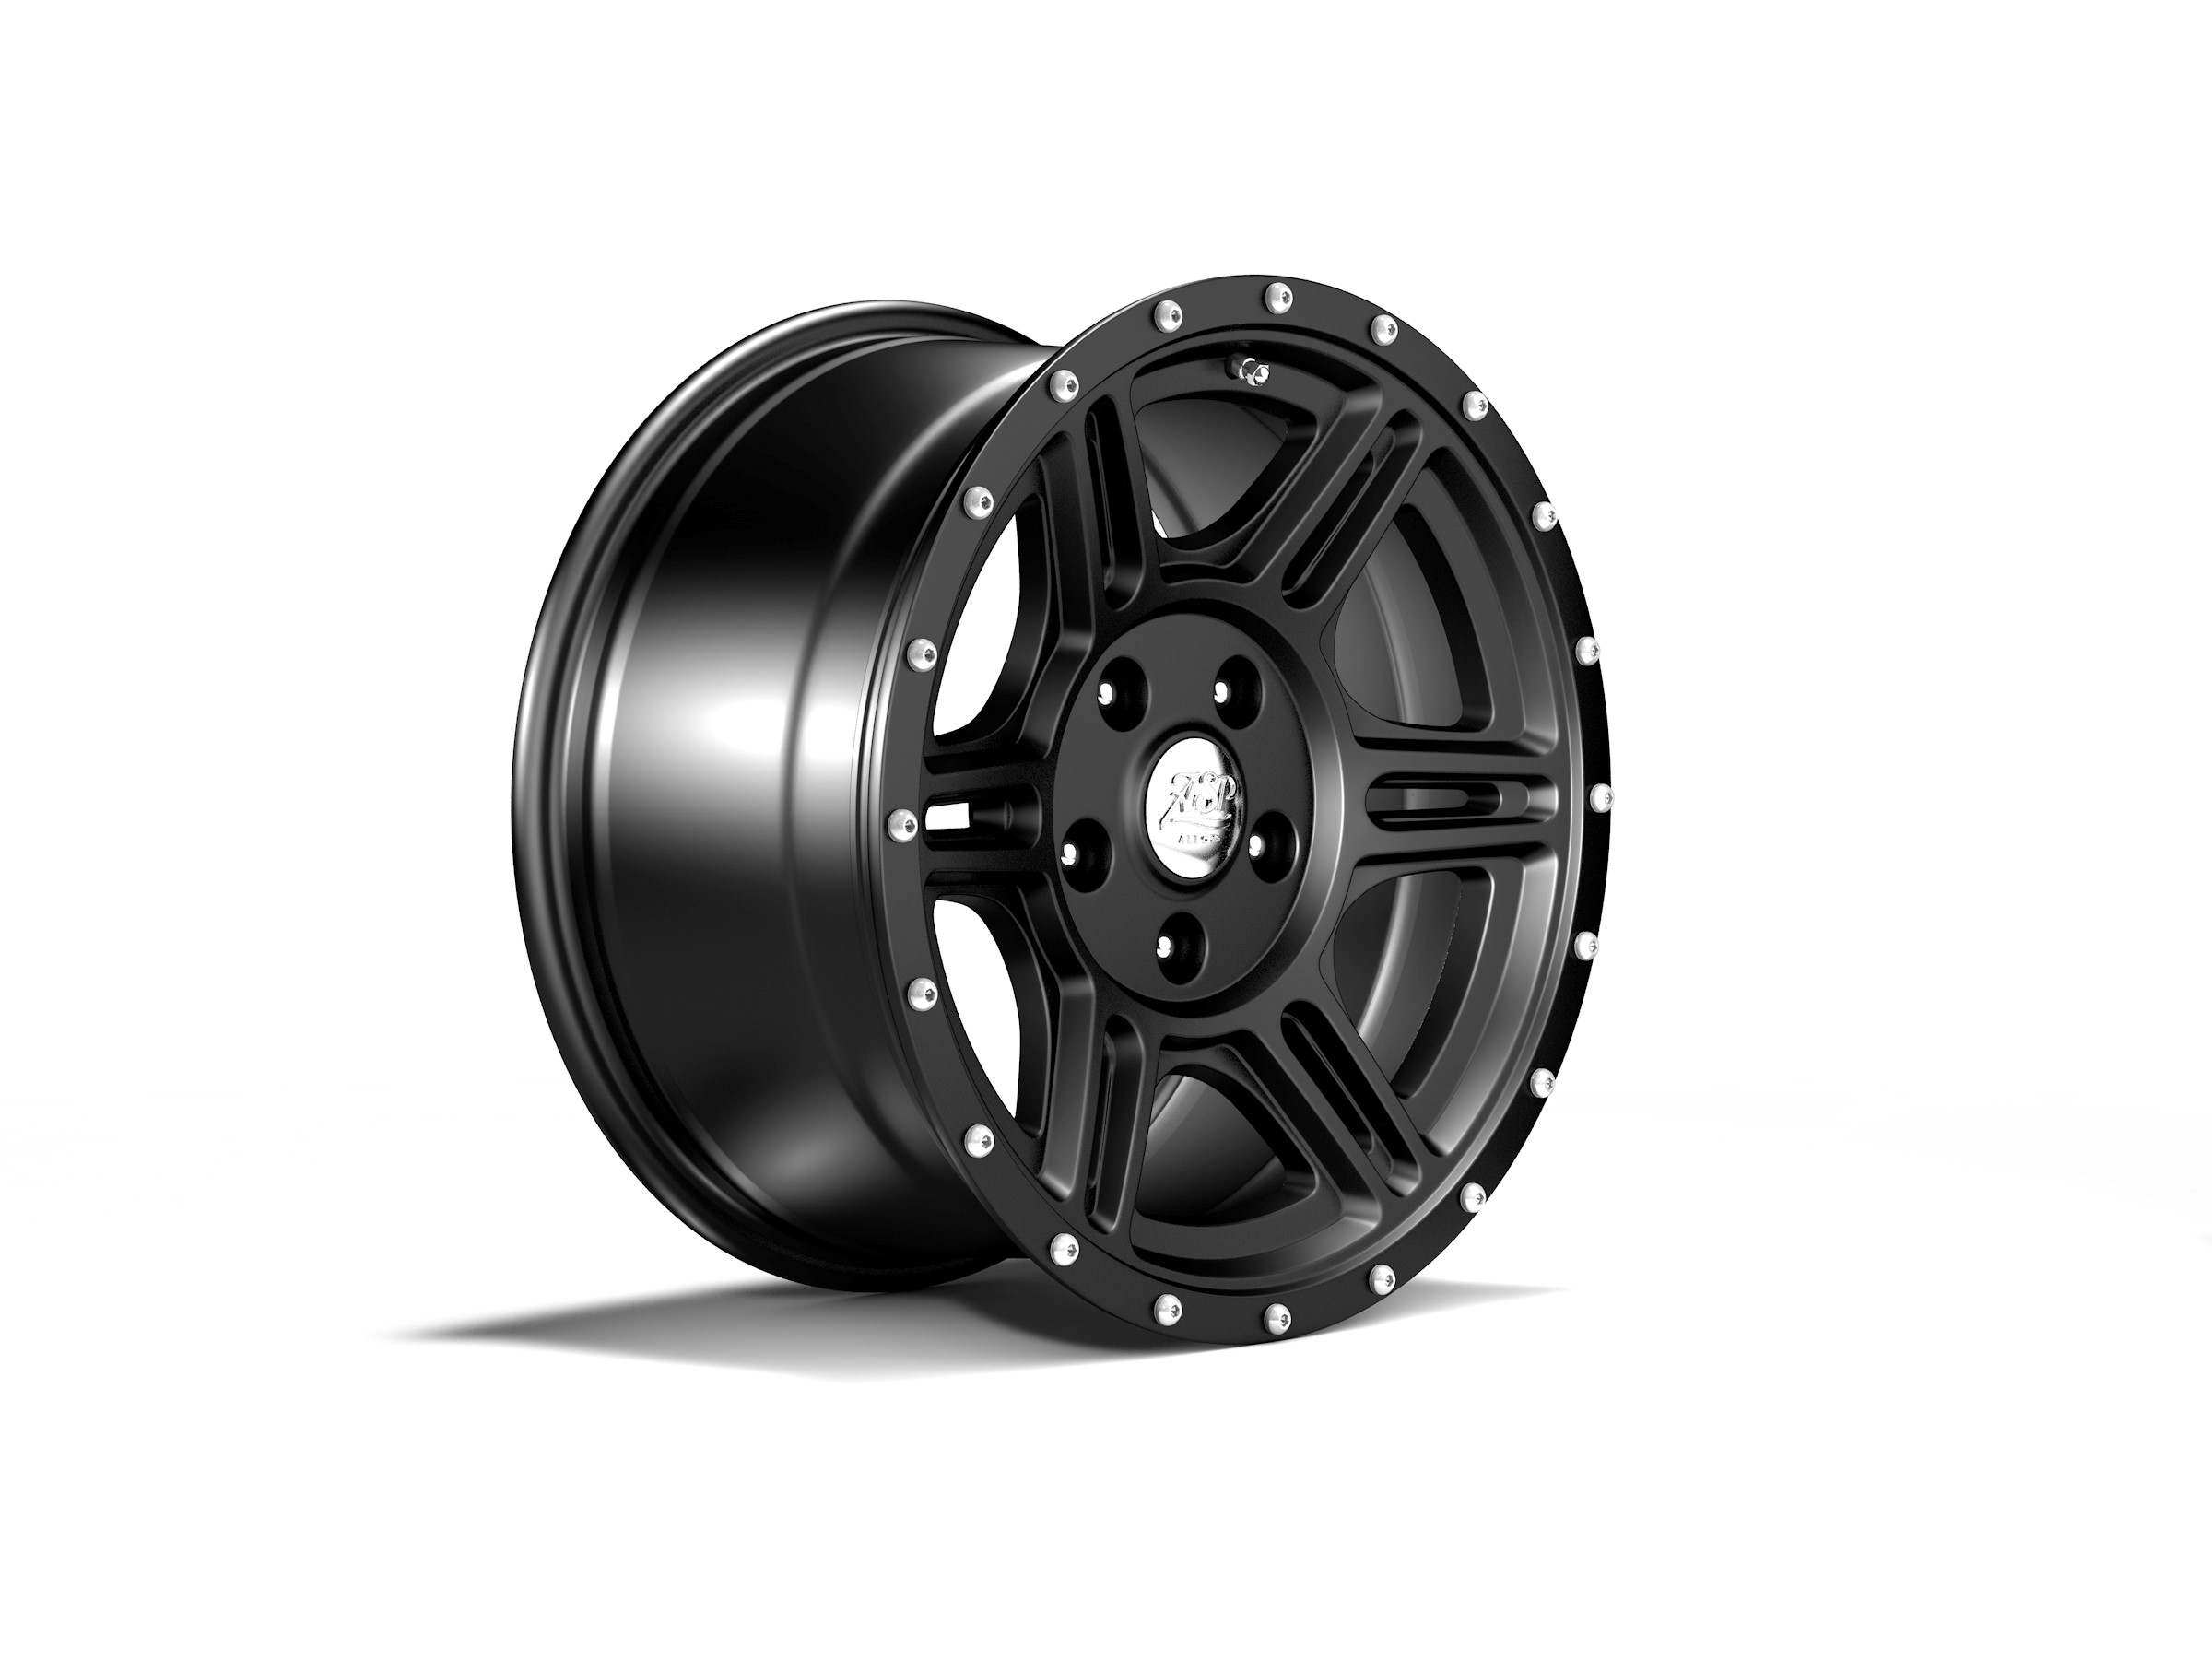 ASP Alloys Alloy wheel 1465      black 8,5x18 ET +32      TÜV approved